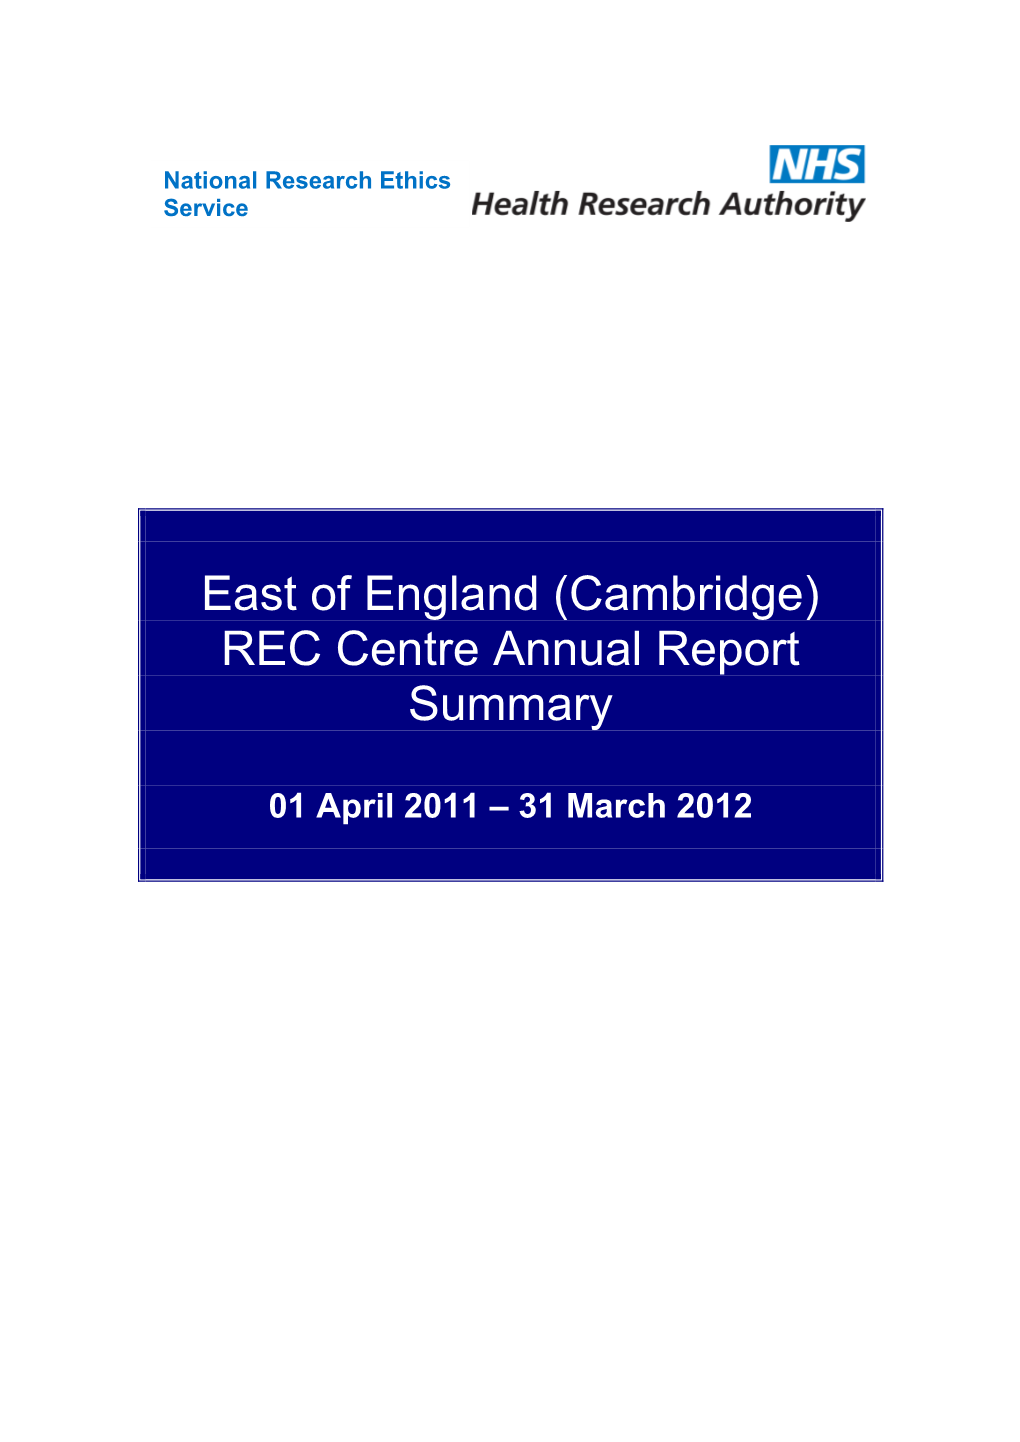 REC Annual Reports